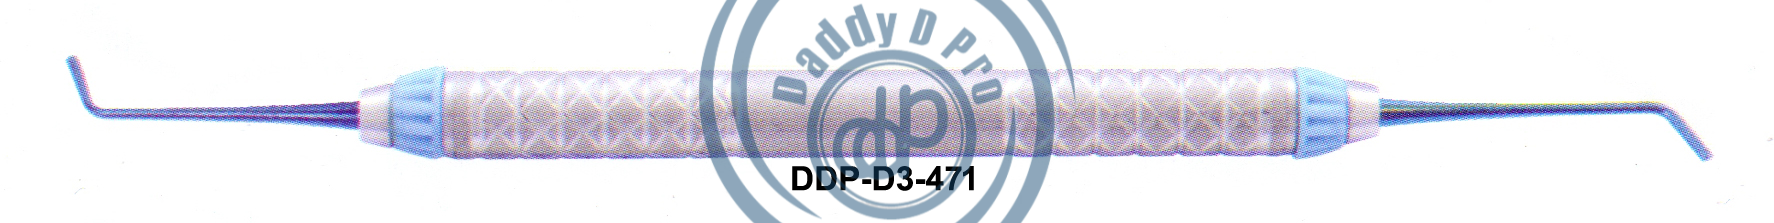 images/DDP-D3-471.png